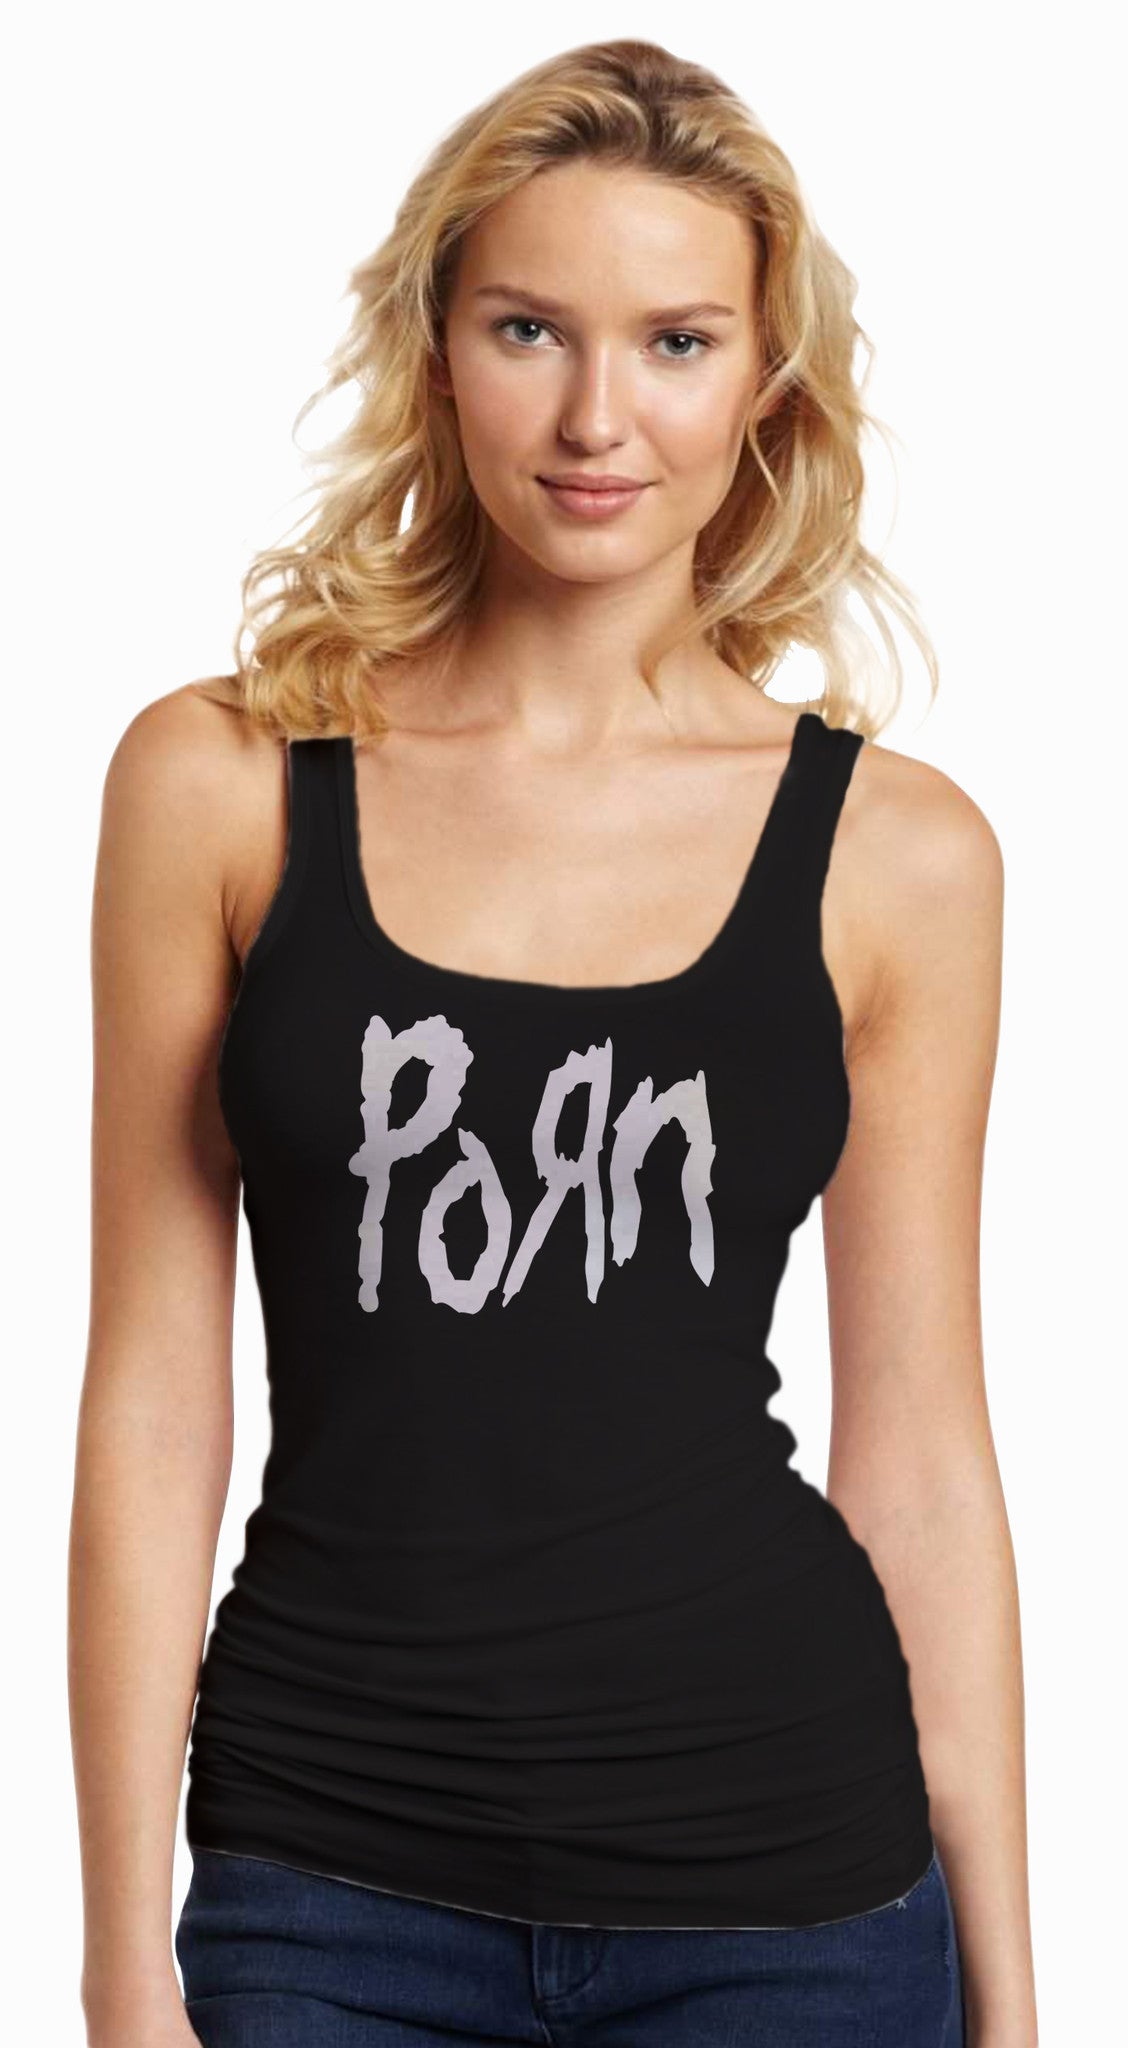 Classic Woman On Woman Porn - Porn Black Tanktop T-shirt for Women